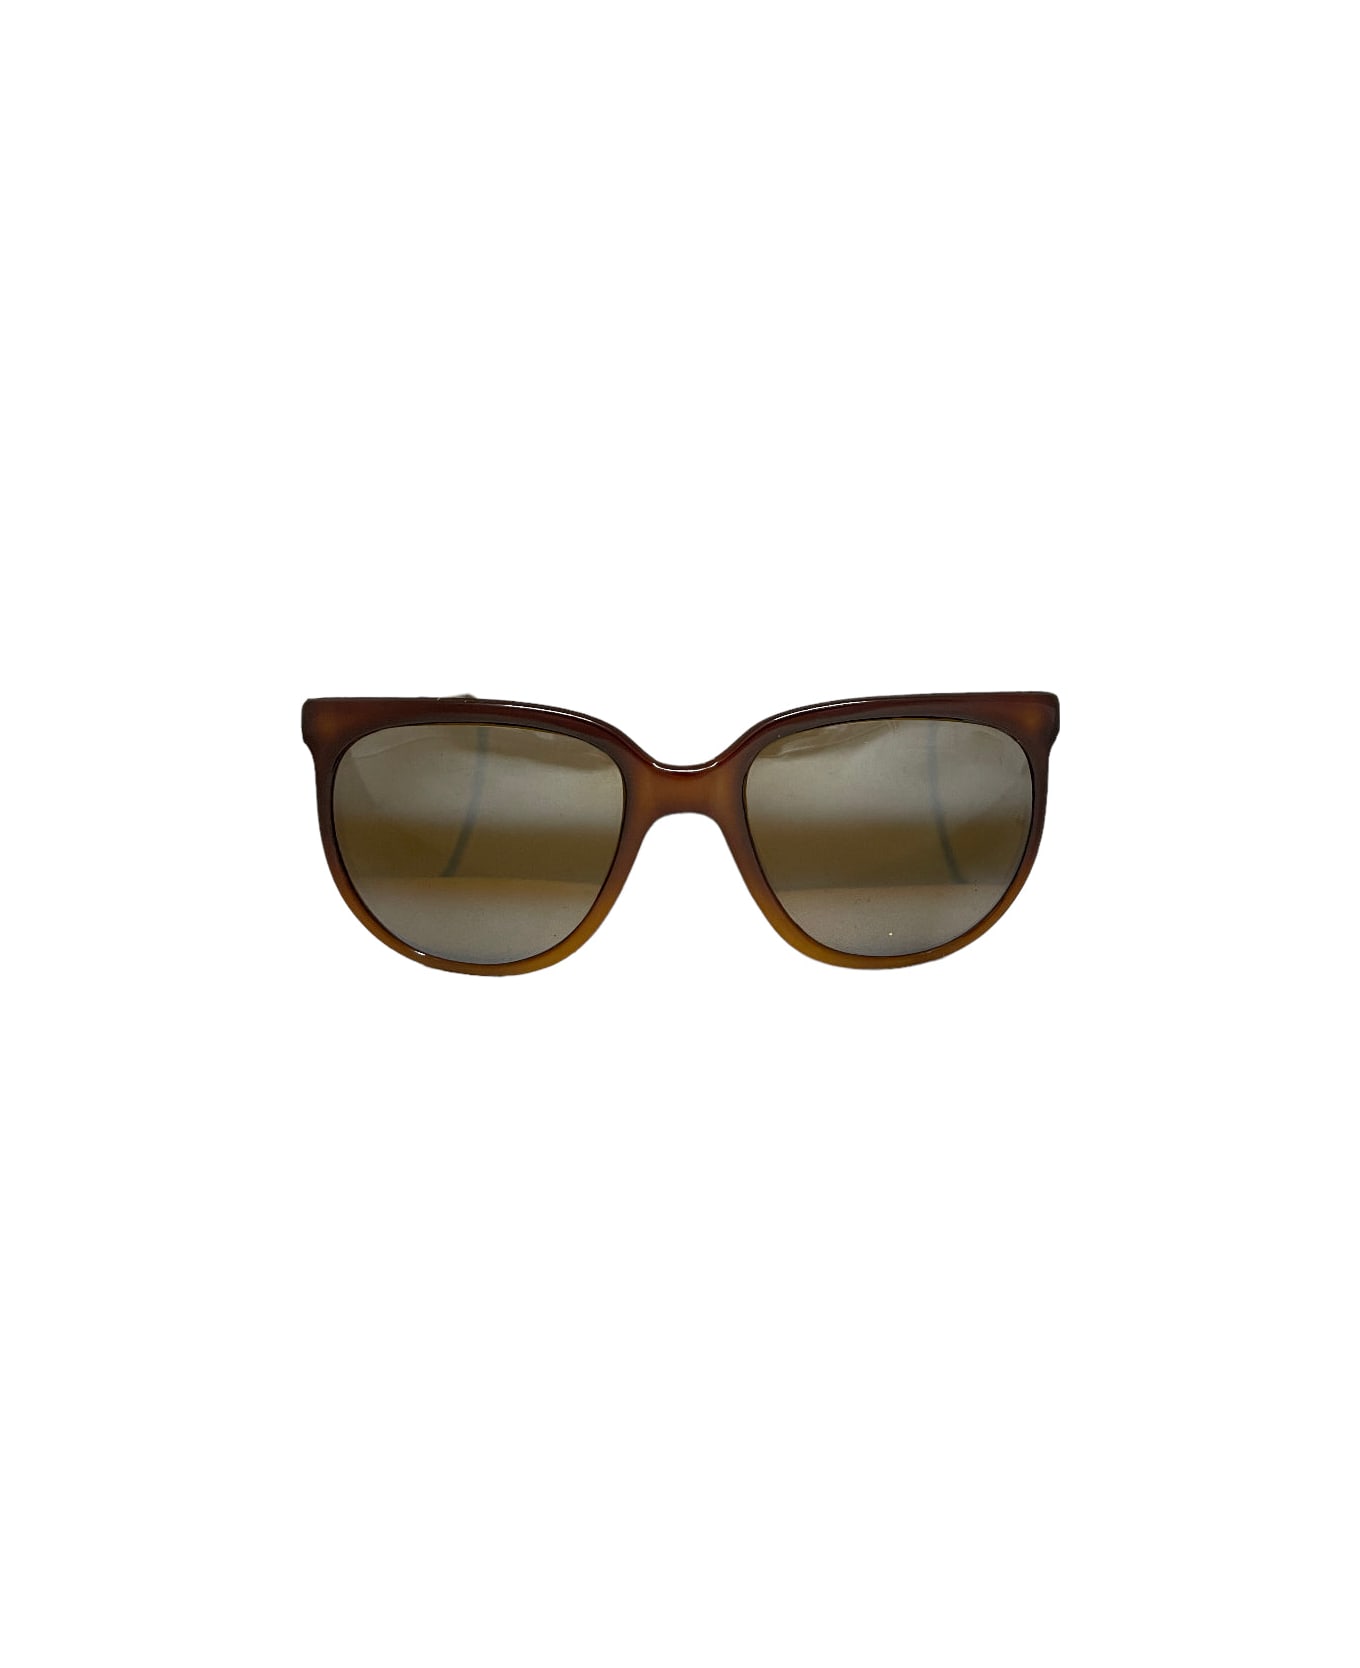 Vuarnet Pouilloux - Brown Sunglasses サングラス